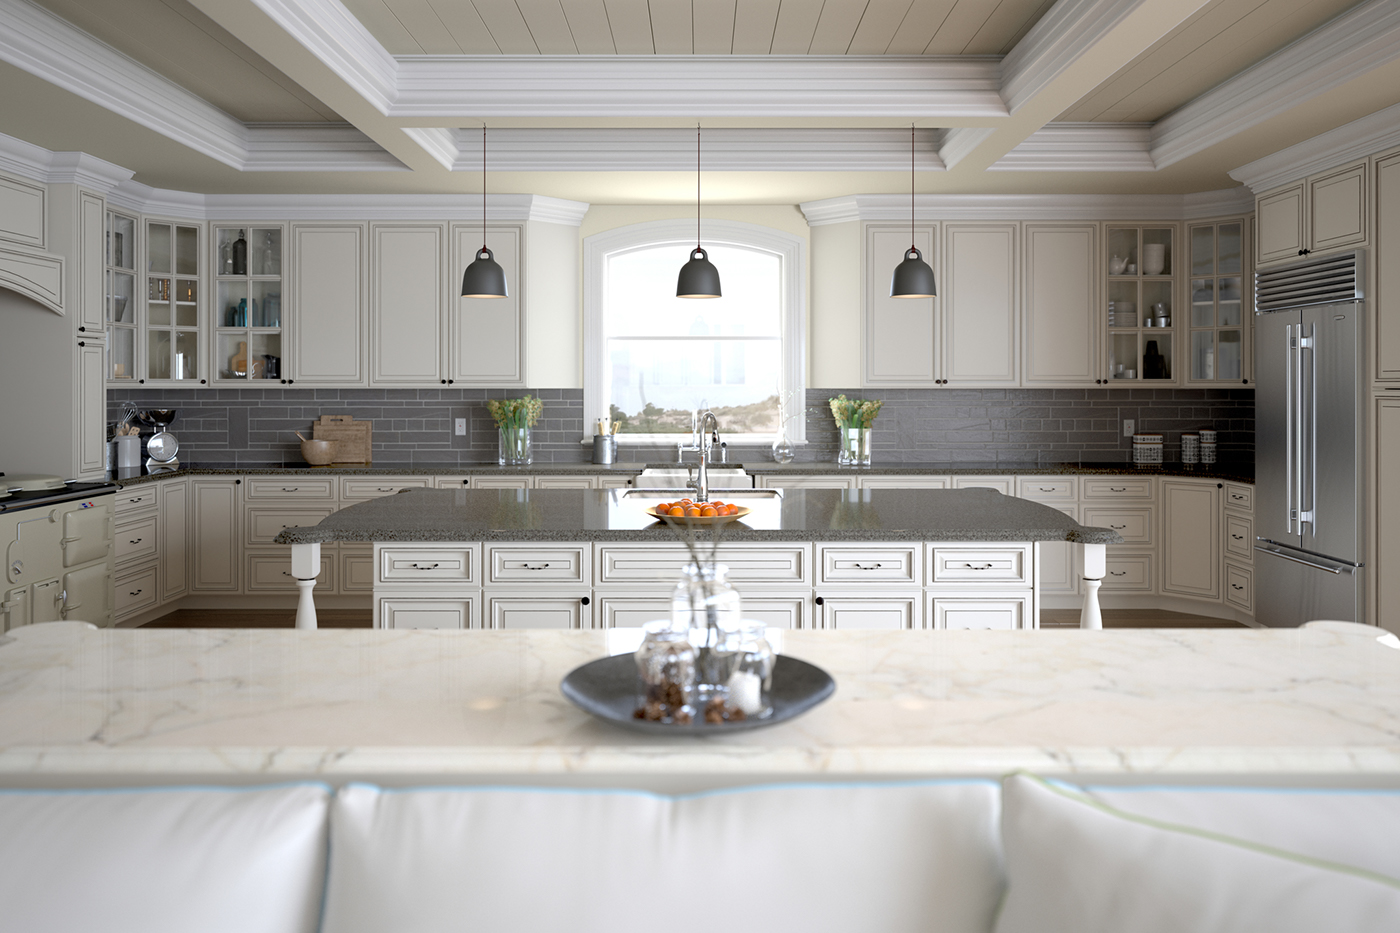 kitchen 3D CGI visualization rendering kitchen cgi Hypothetical INTERIOR RENDERING residential